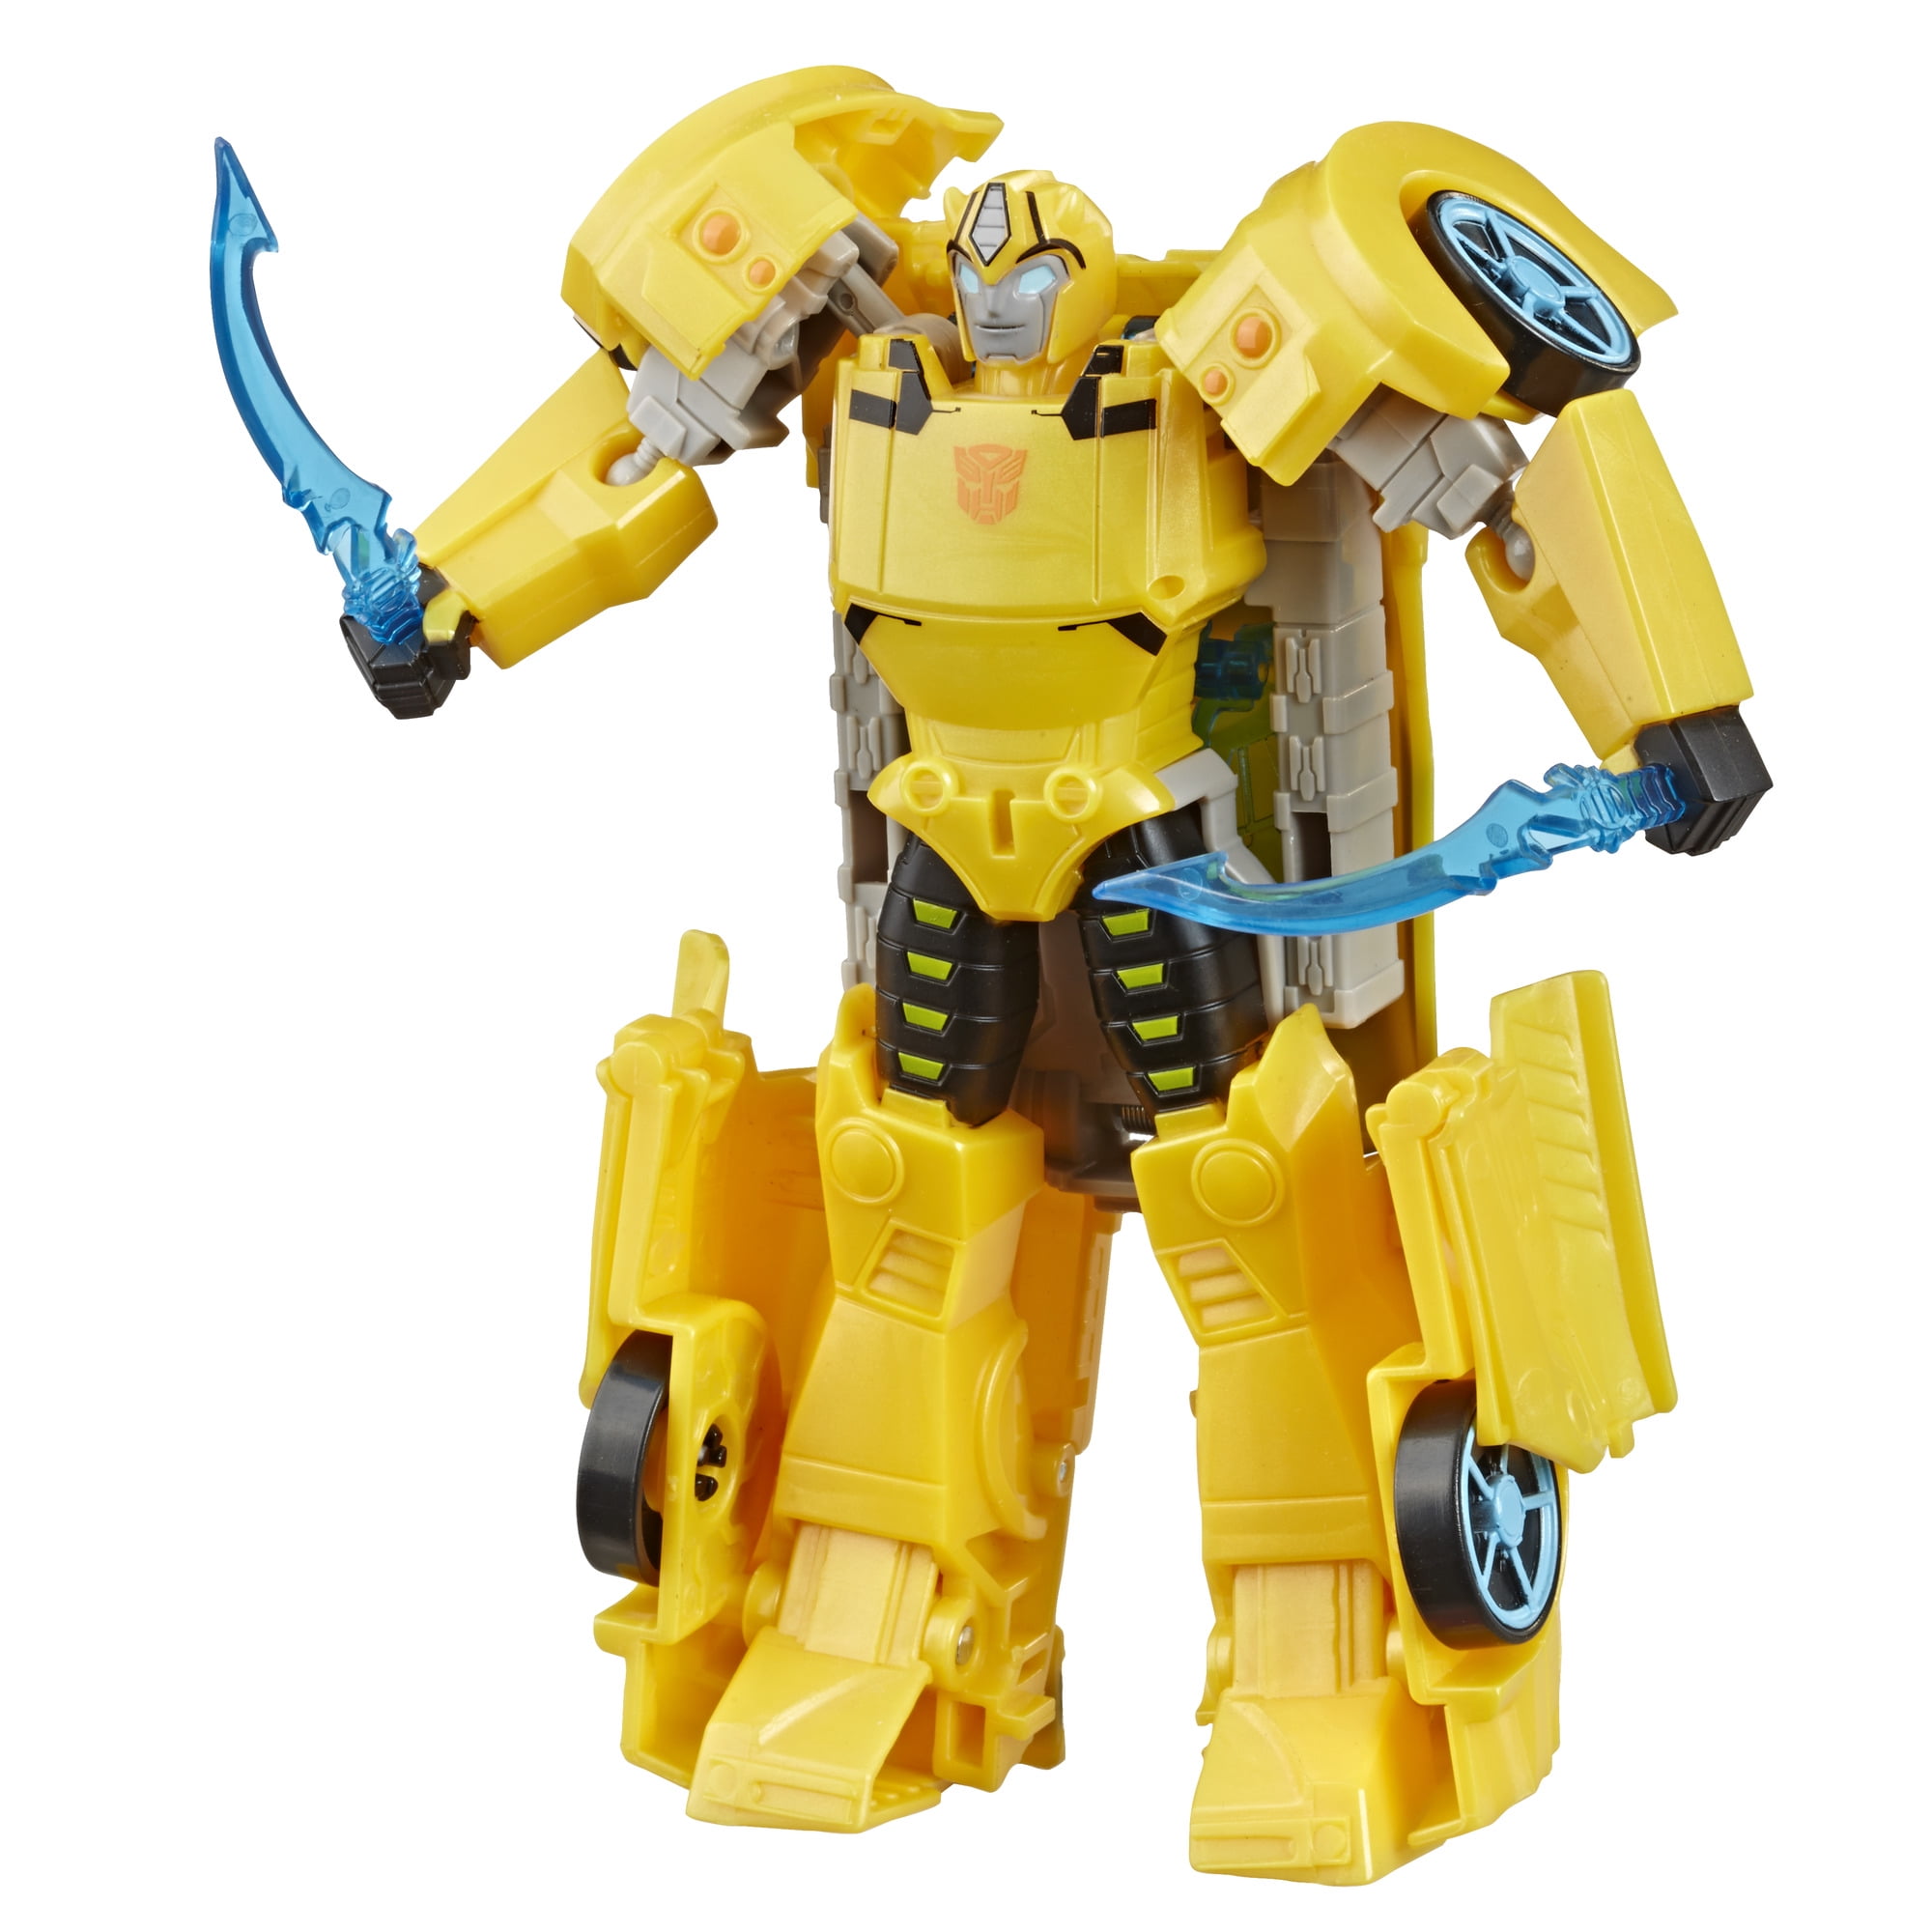 2017 Hasbro Transformers Authentics Bravo Autobot Bumblebee Action Figure for sale online